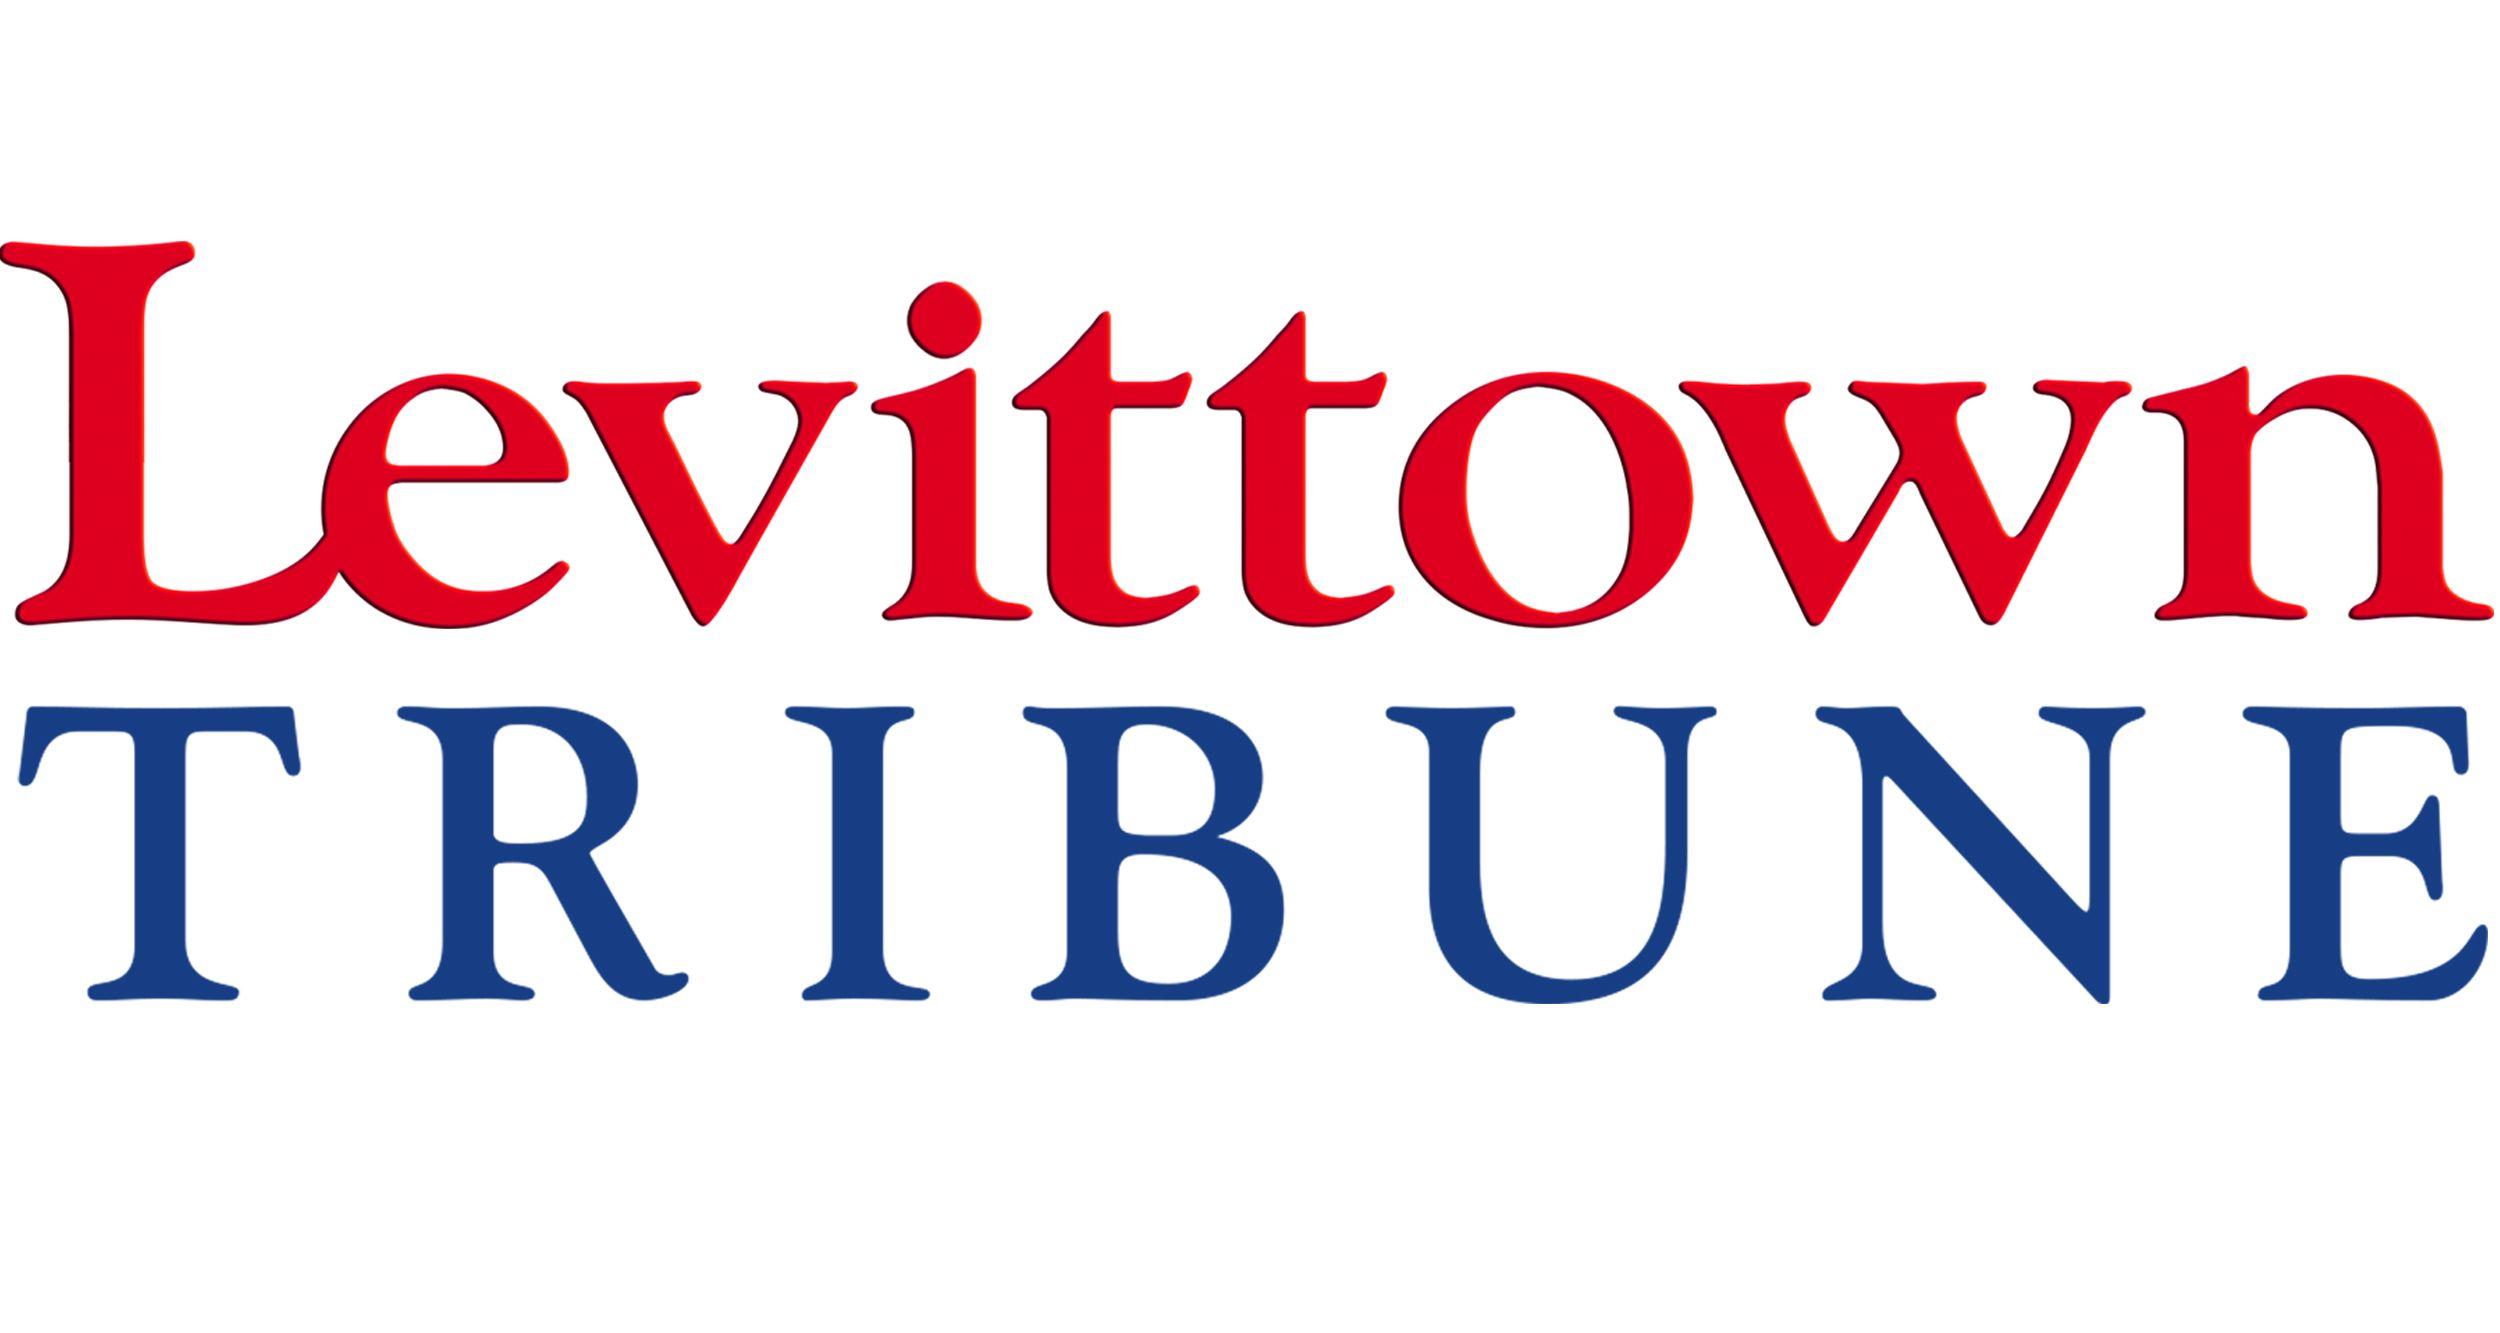 Levittown Logo - Levittown Tribune. An Anton Publication